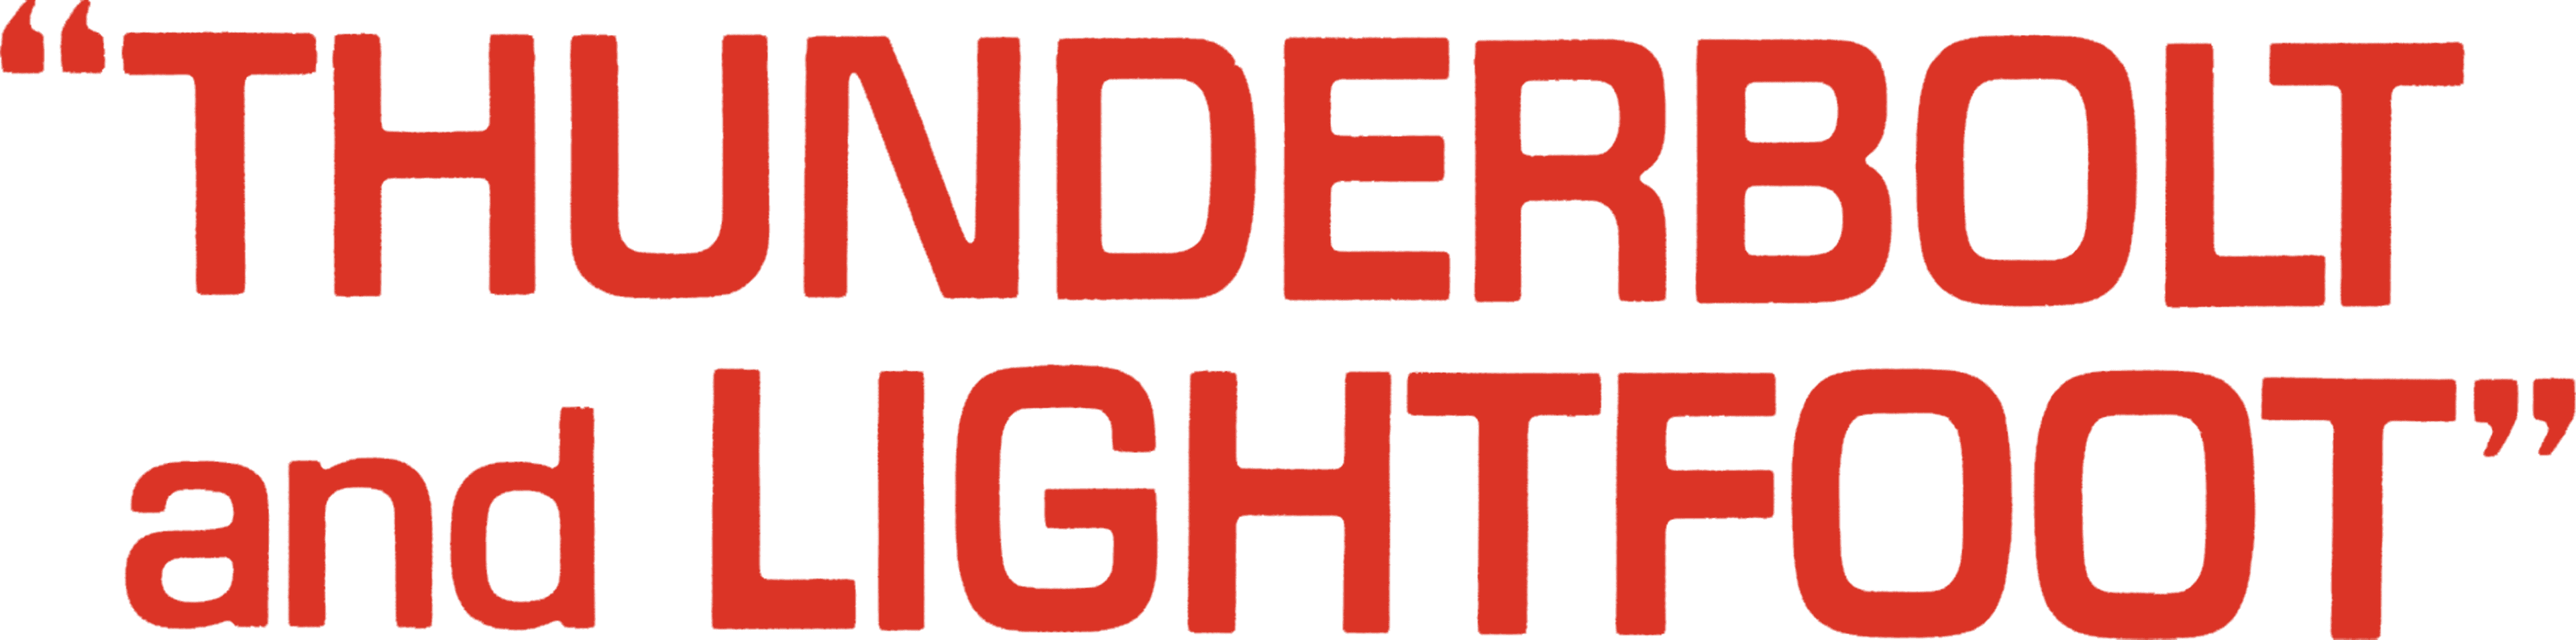 Thunderbolt and Lightfoot logo